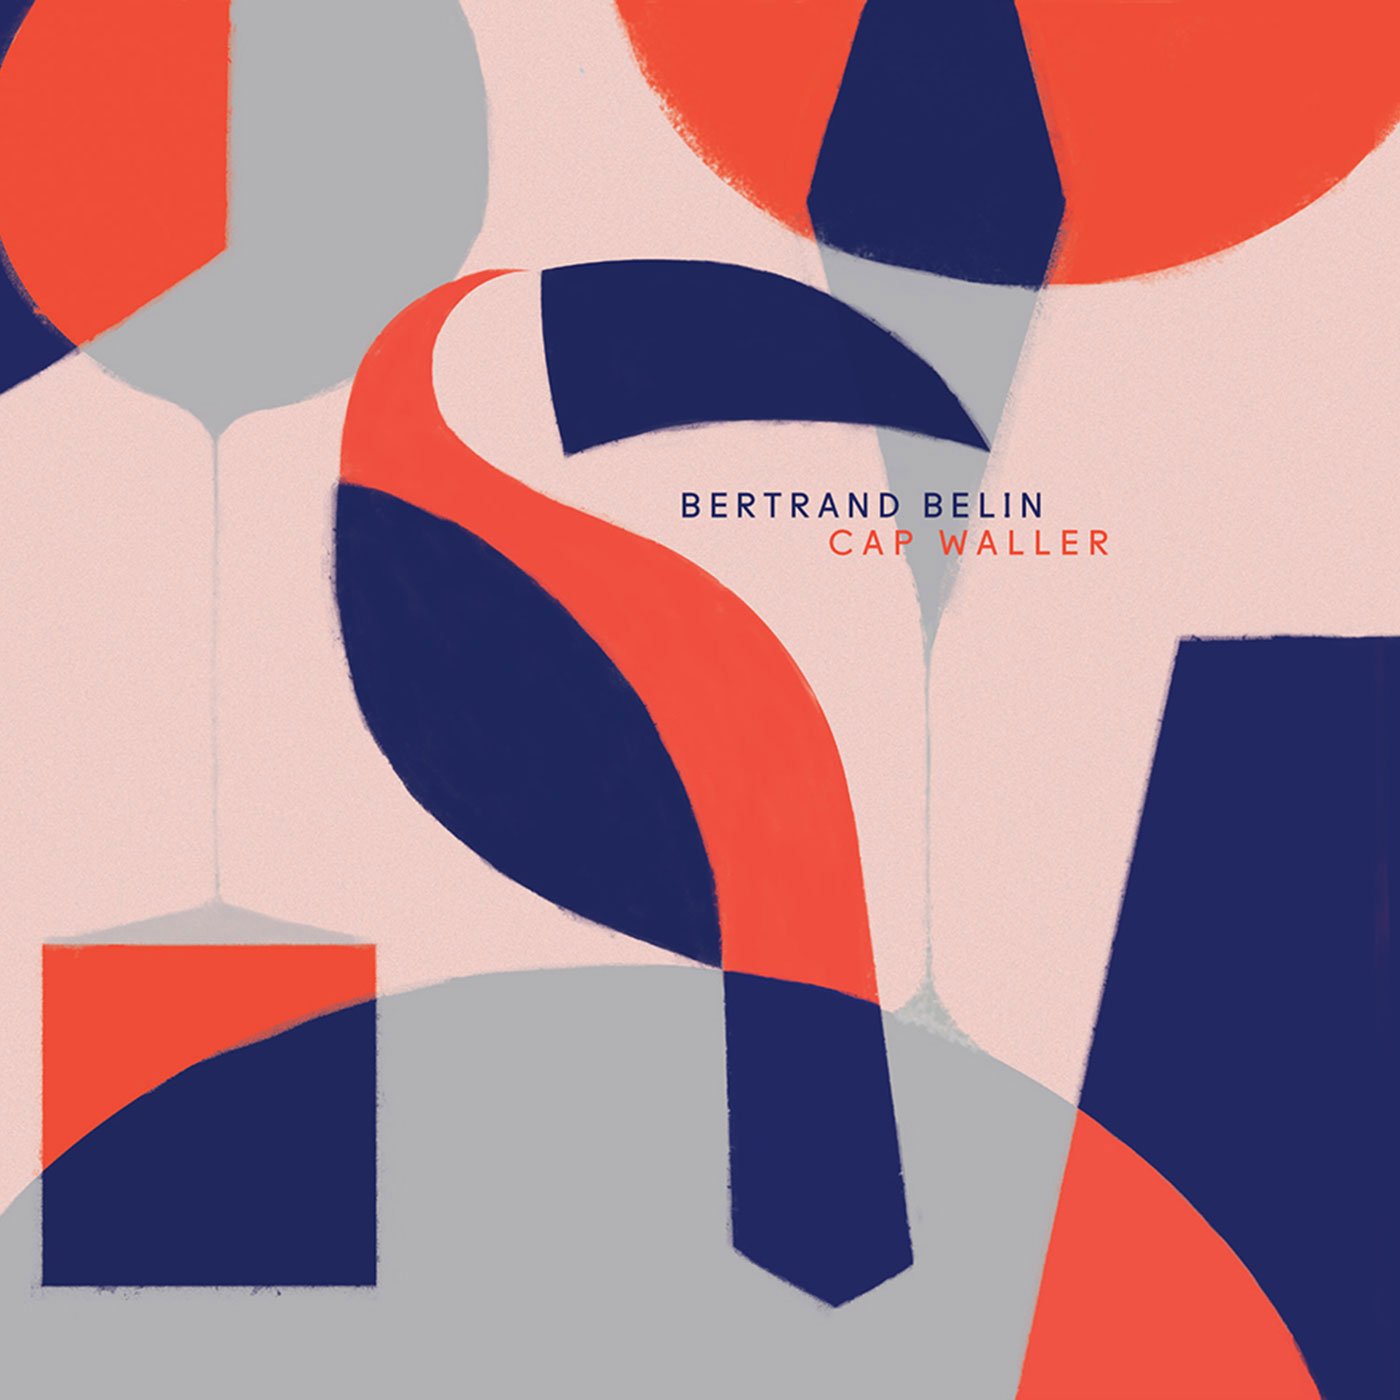 Bertrand Belin  Bravo musique - Music and talent label